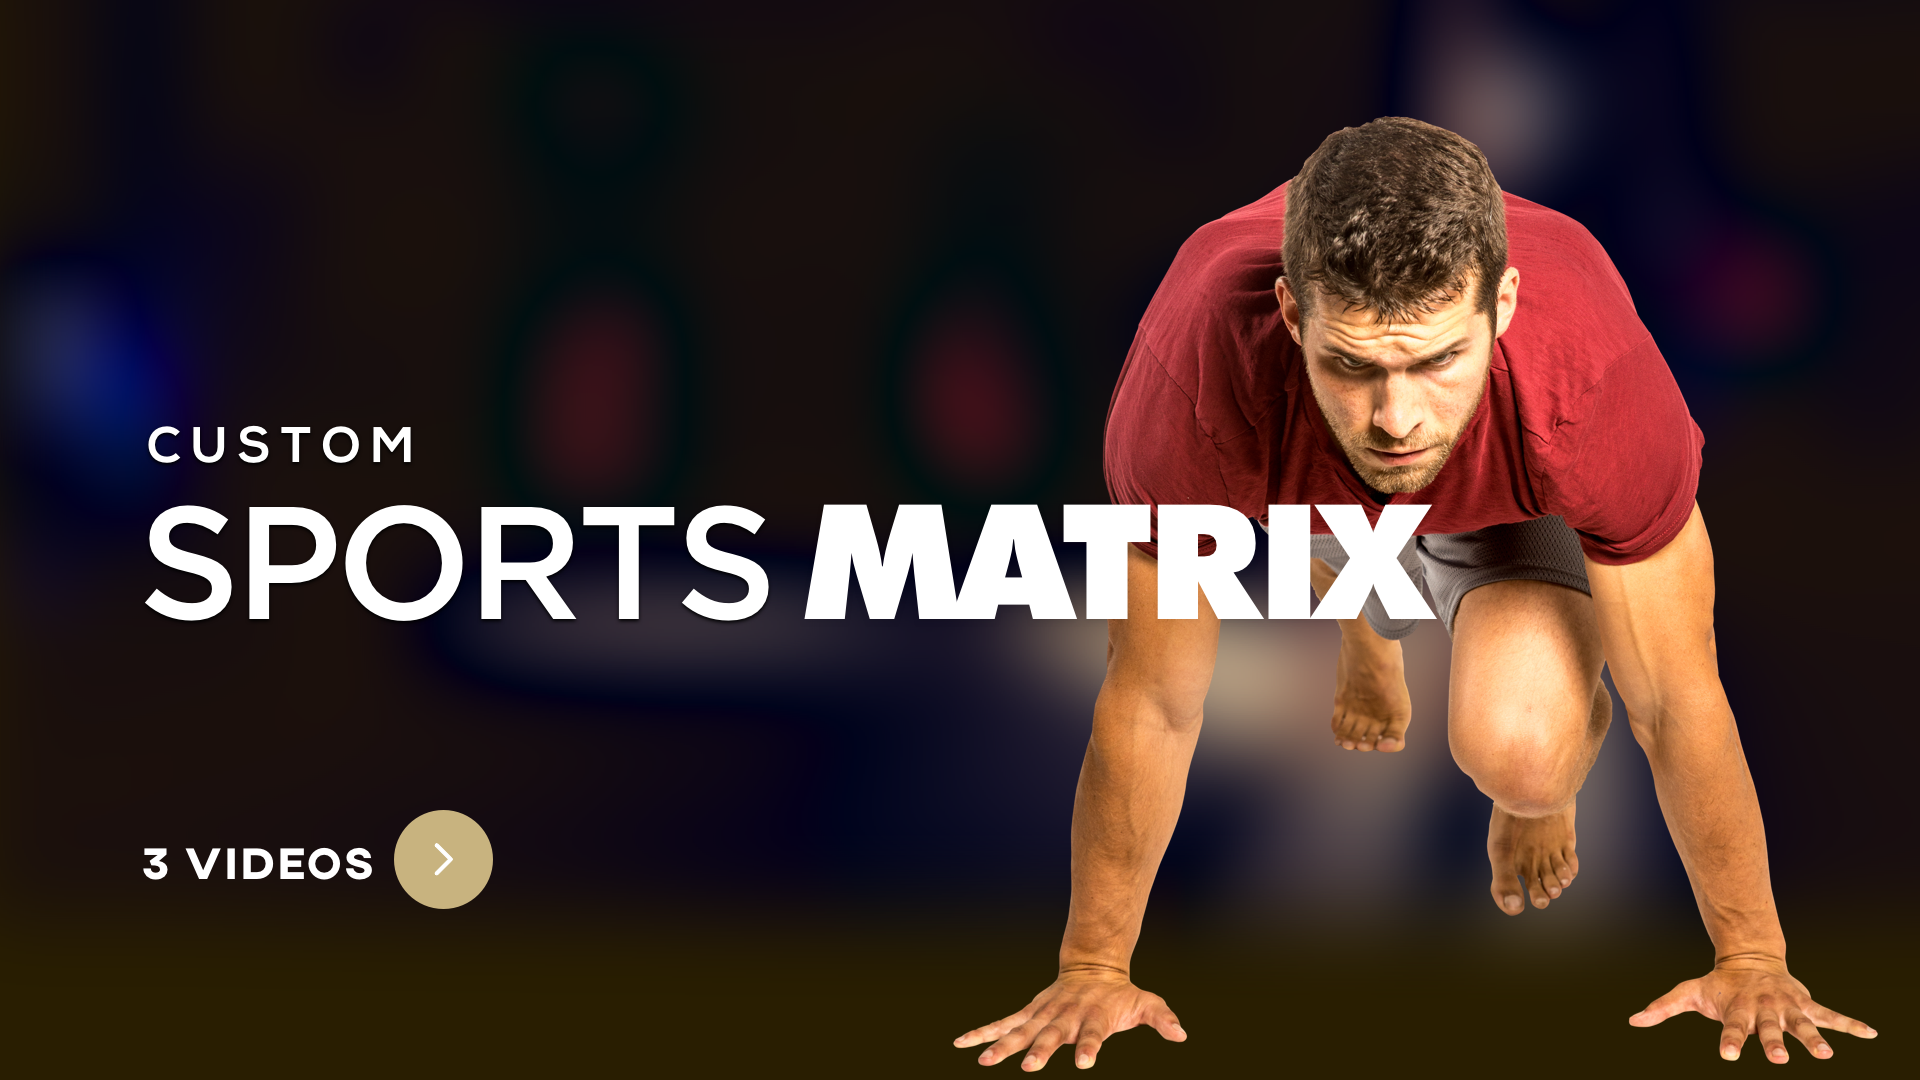 Custome-Sports-Matrix